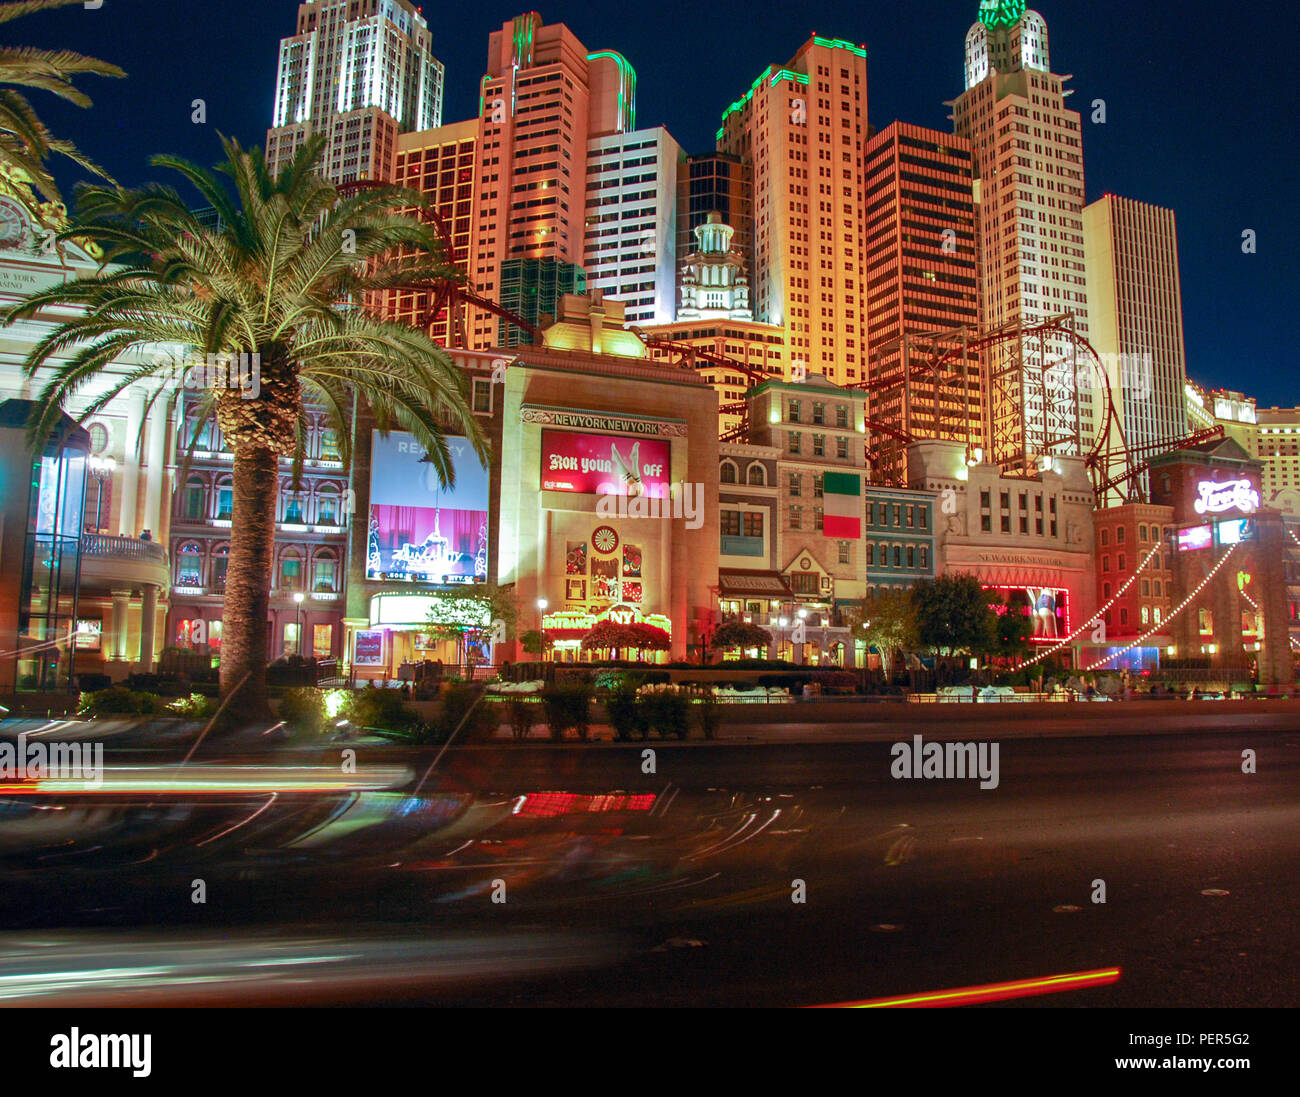 Das New York New York Hotel in Las Vegas bei Nacht Stockfoto